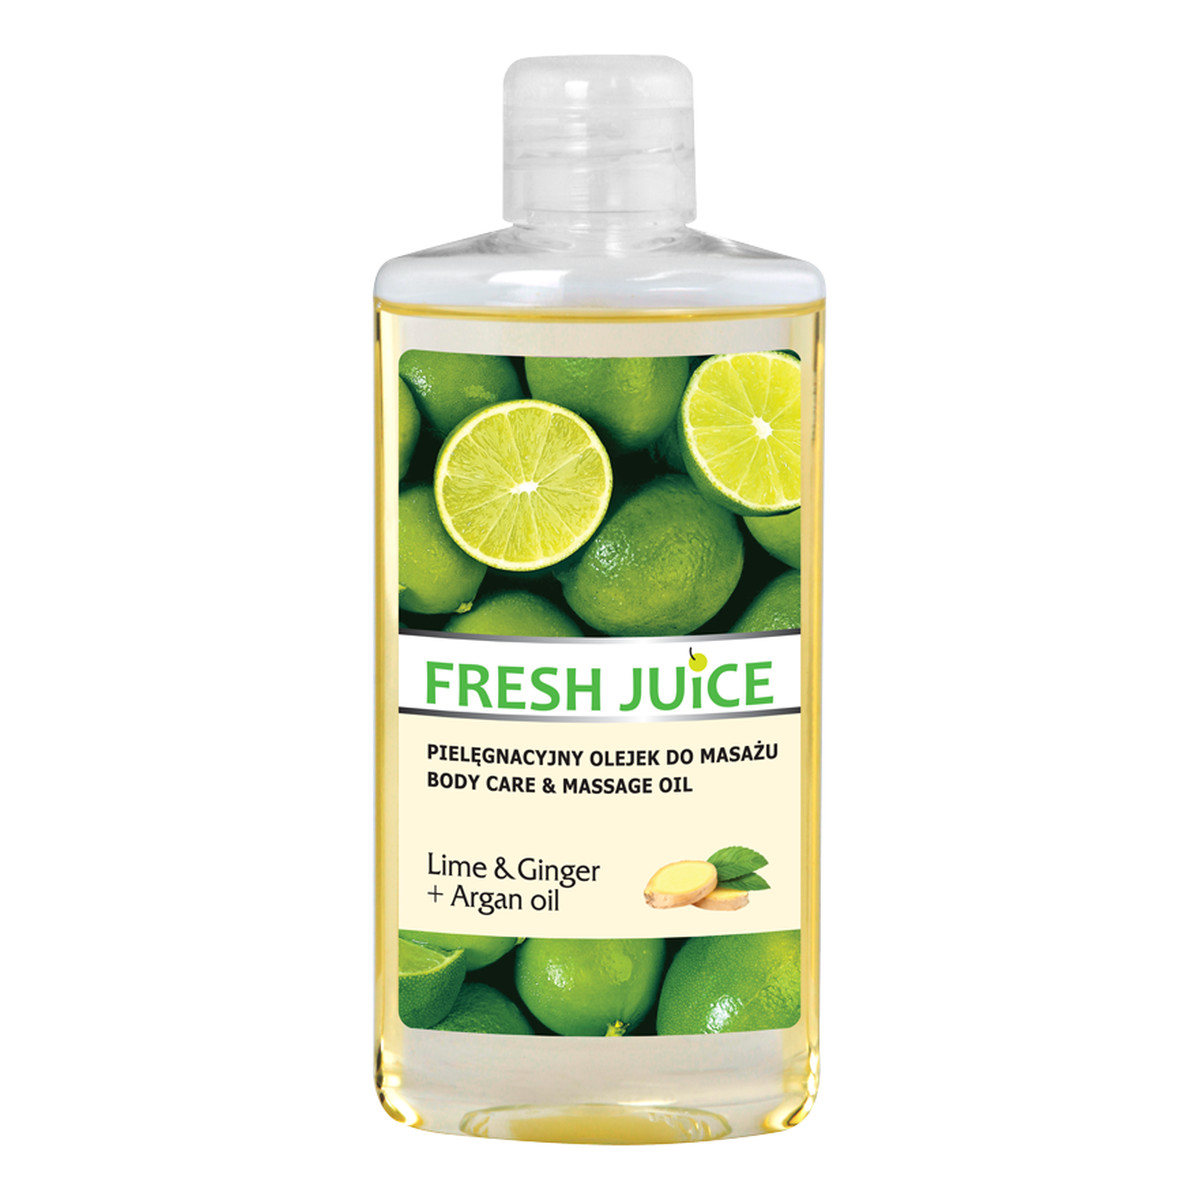 Fresh Juice Lime & Ginger + Argan oil Pielęgnacyjny olejek do masażu 150ml